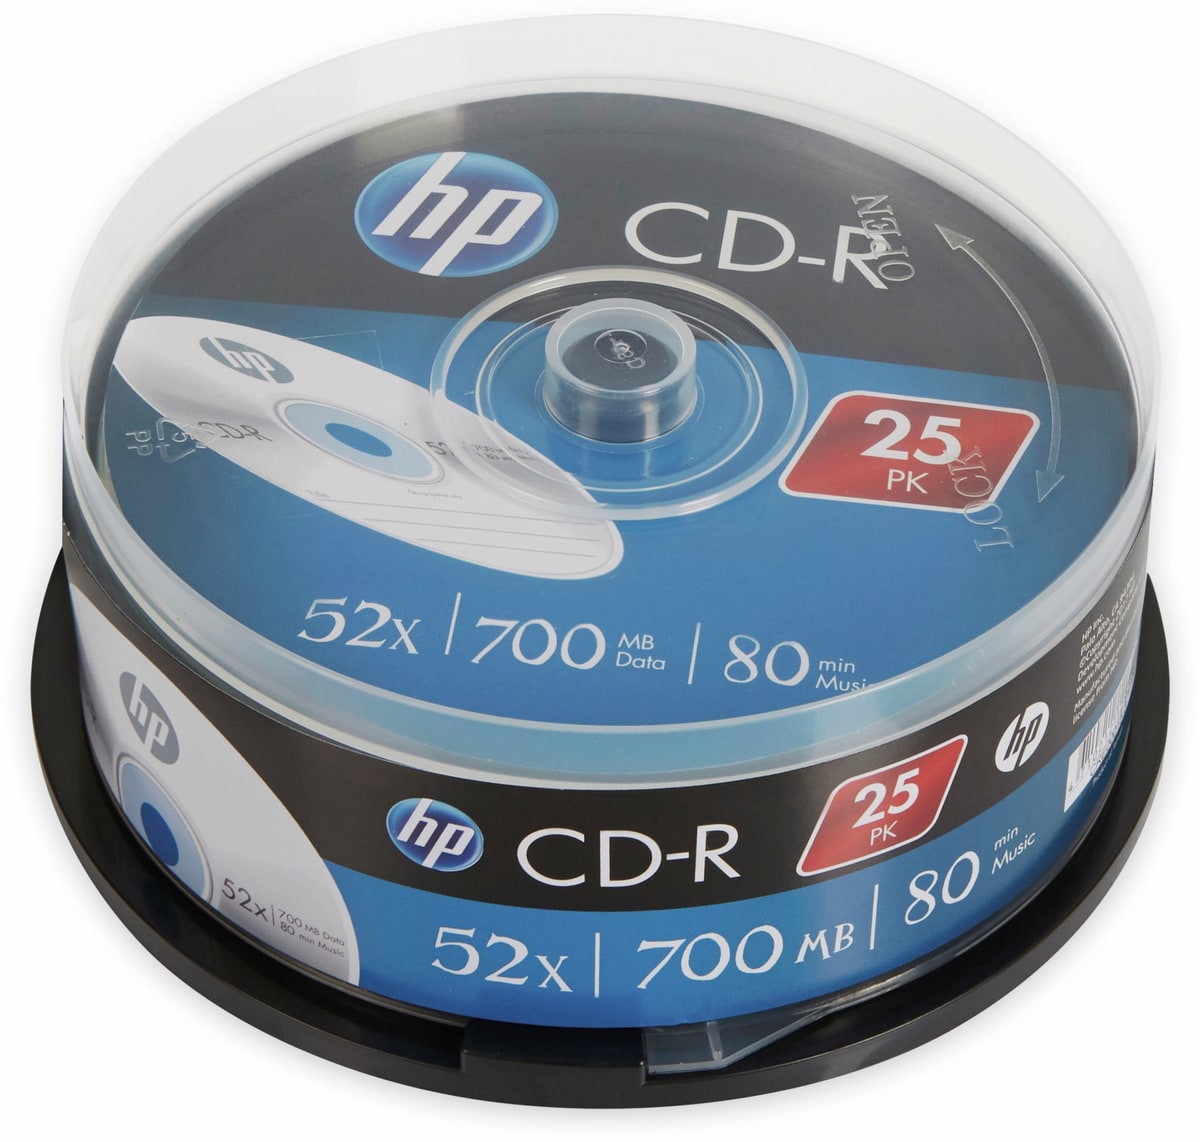 HP CD-R 80Min, 700MB, 52x, Cakebox, 25 CDs, Silver Surface von HP